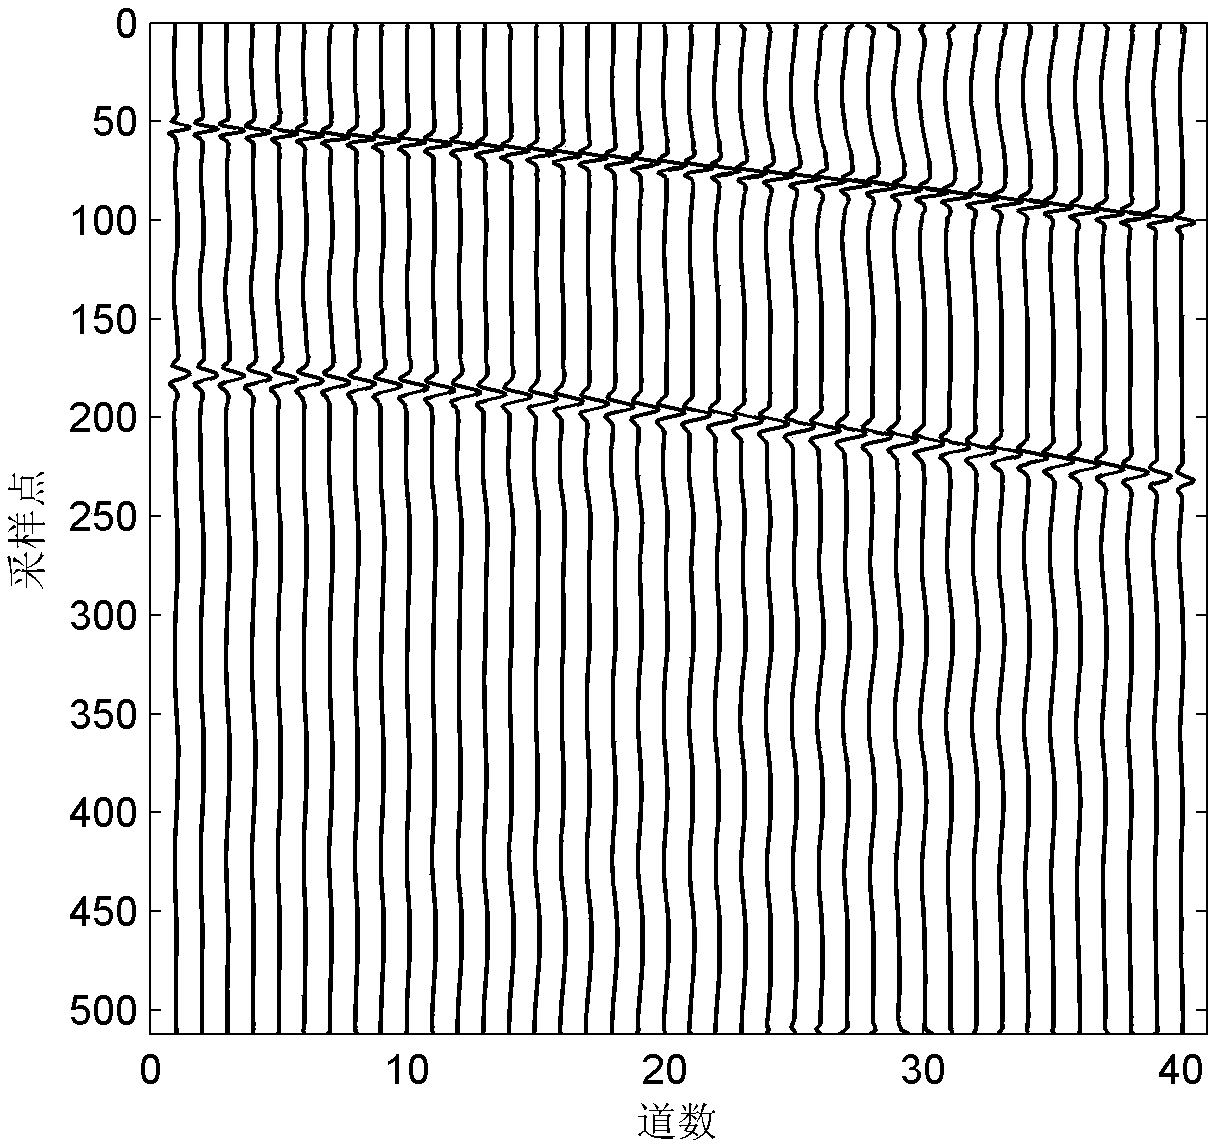 Desert seismic signal denoising method based on VMD approximate entropy and multi-layer perceptron